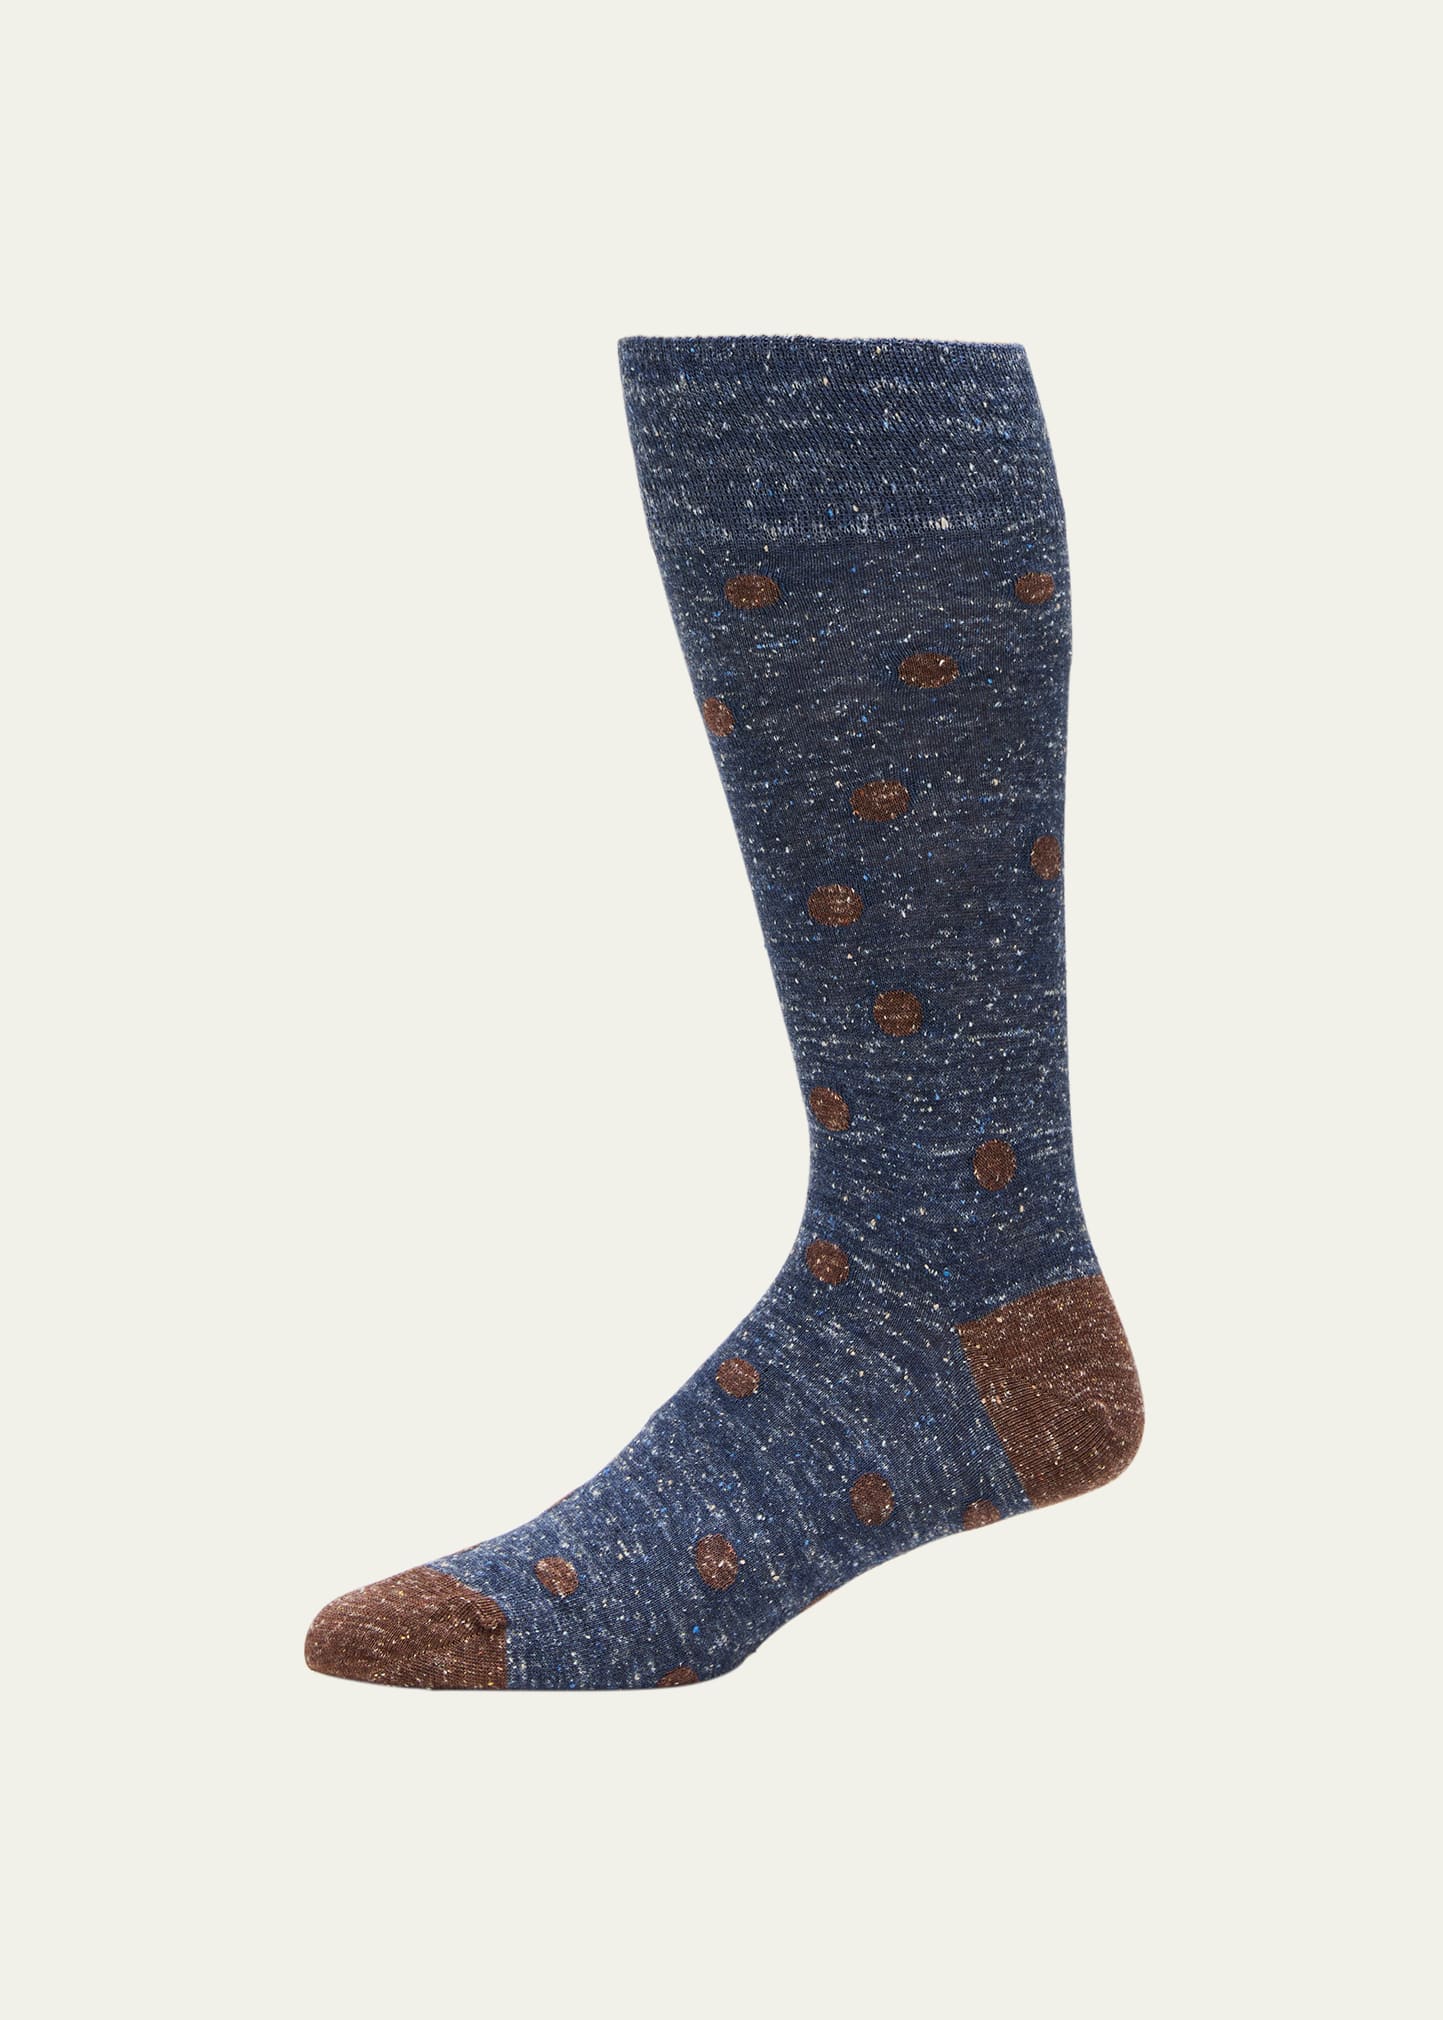 Paul Smith Navy Blue Polka Dot Cotton-blend Socks